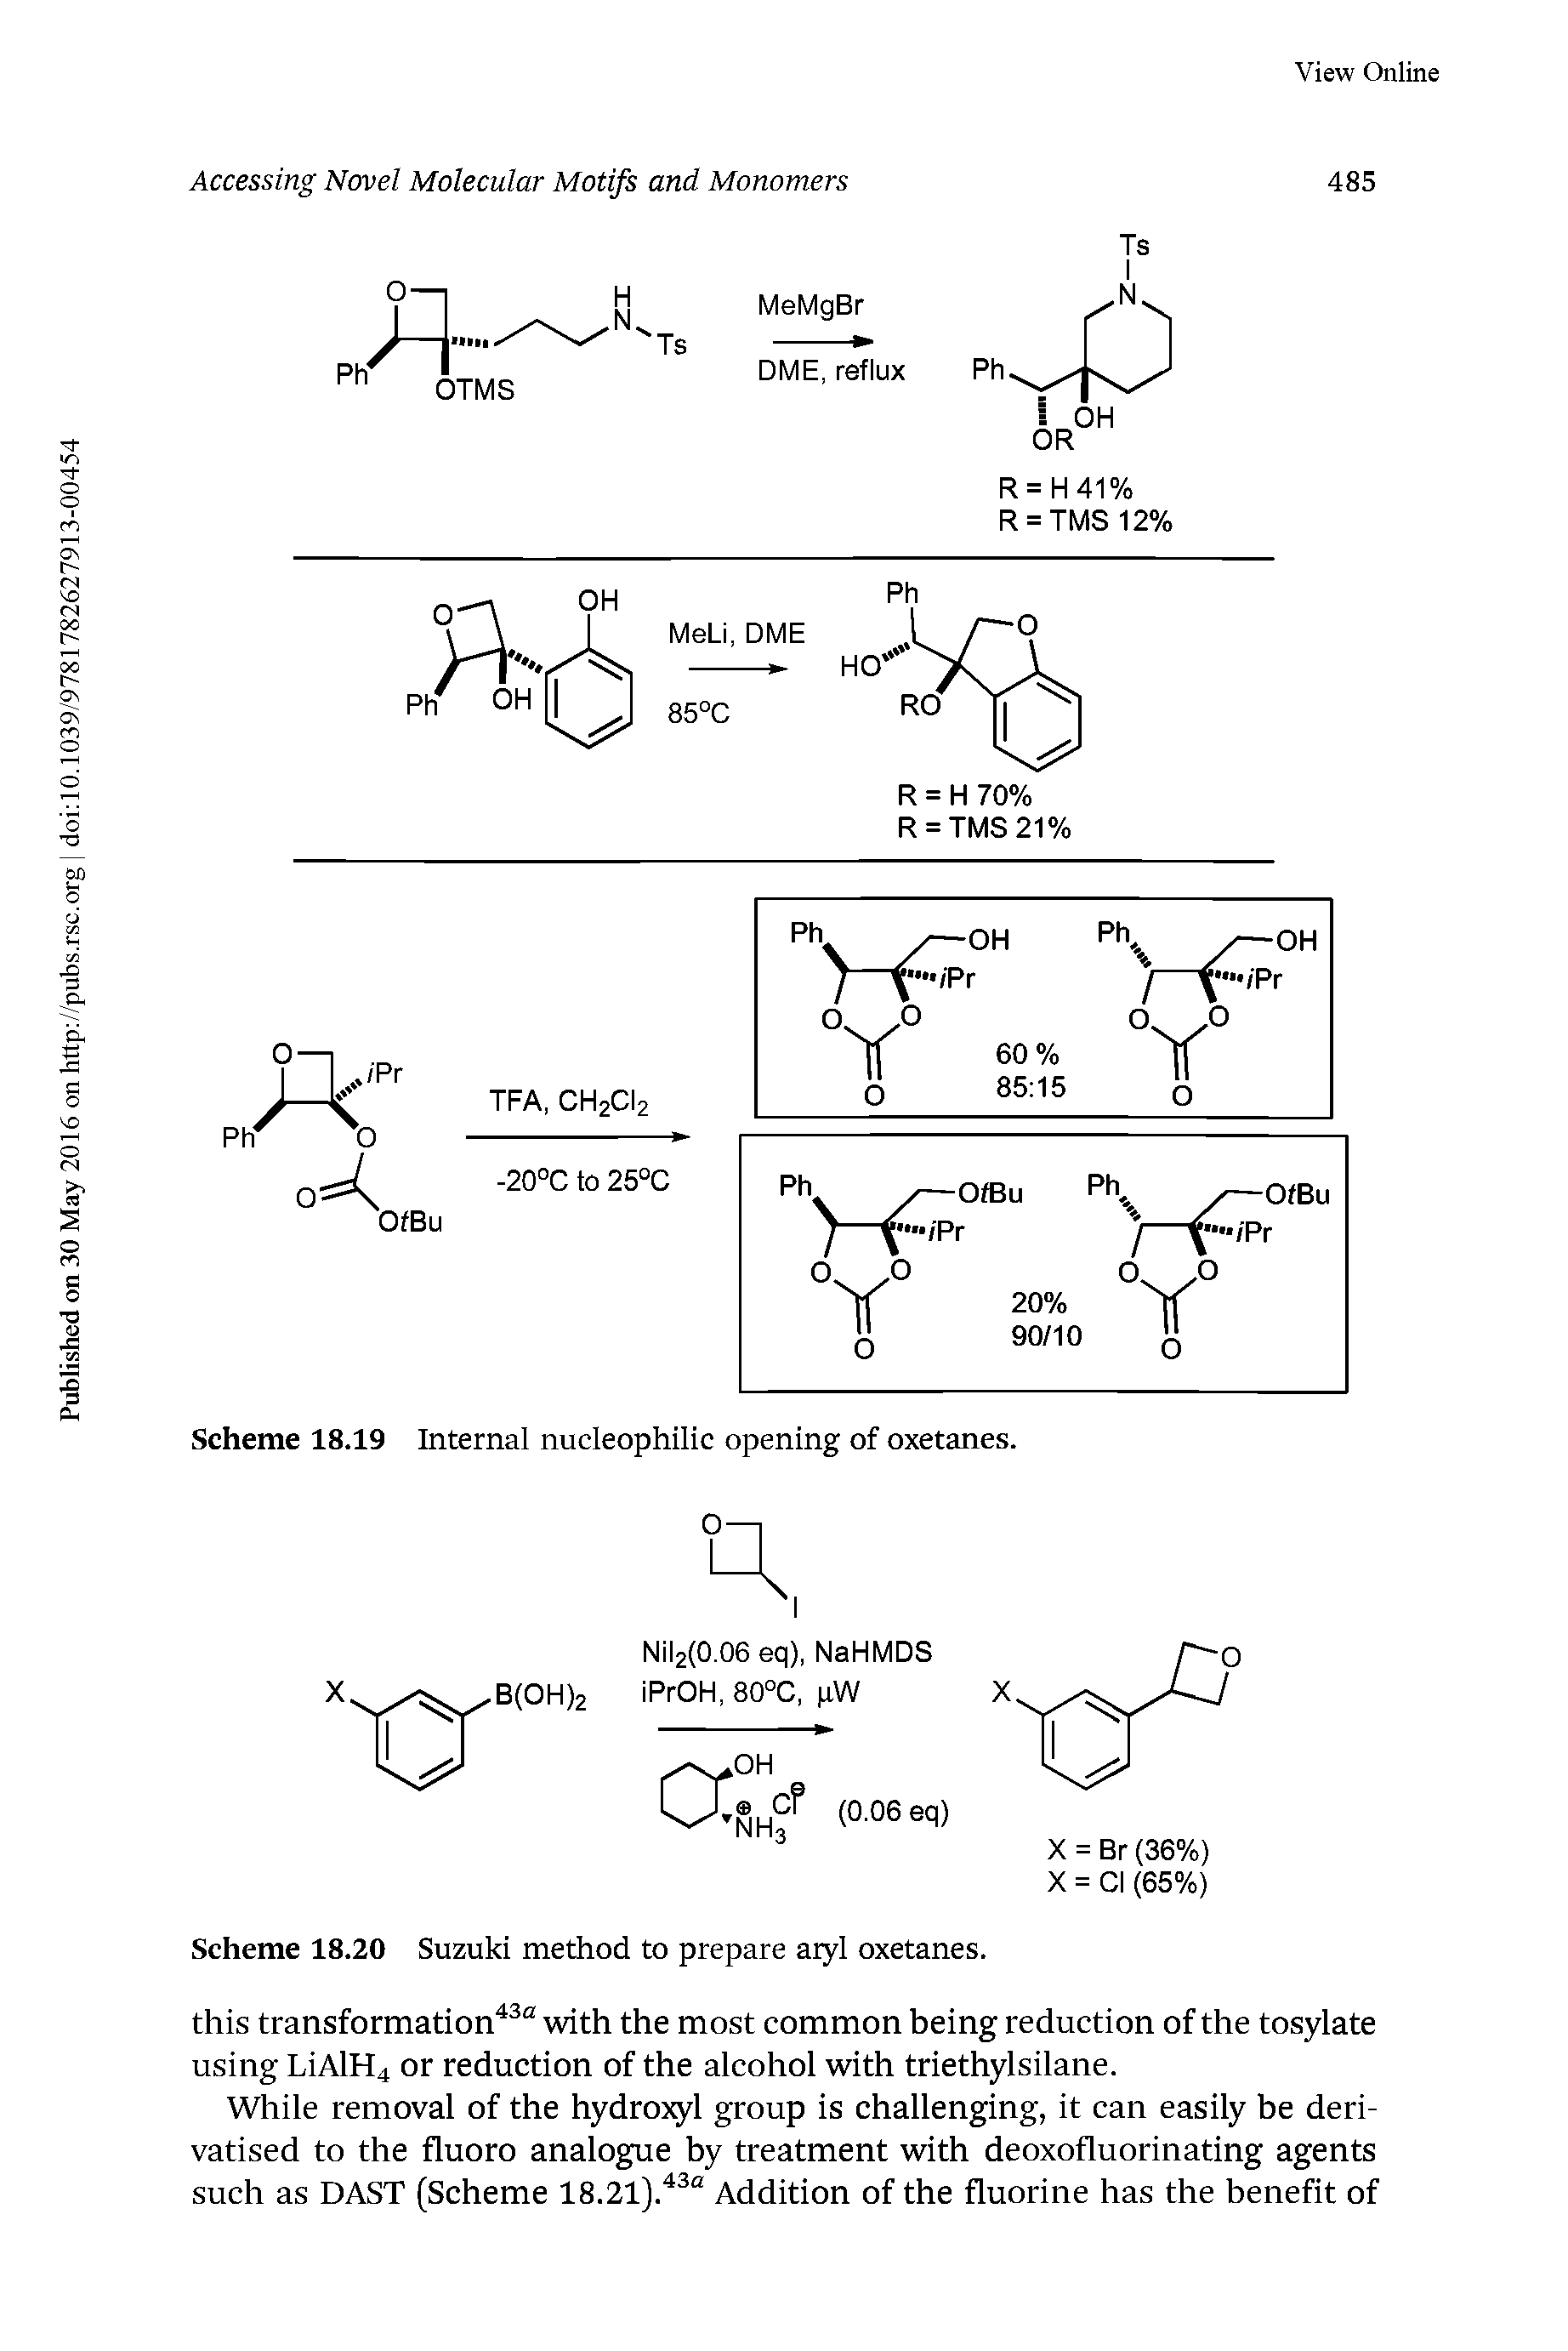 Scheme 18.20 Suzuki method to prepare aryl oxetanes.